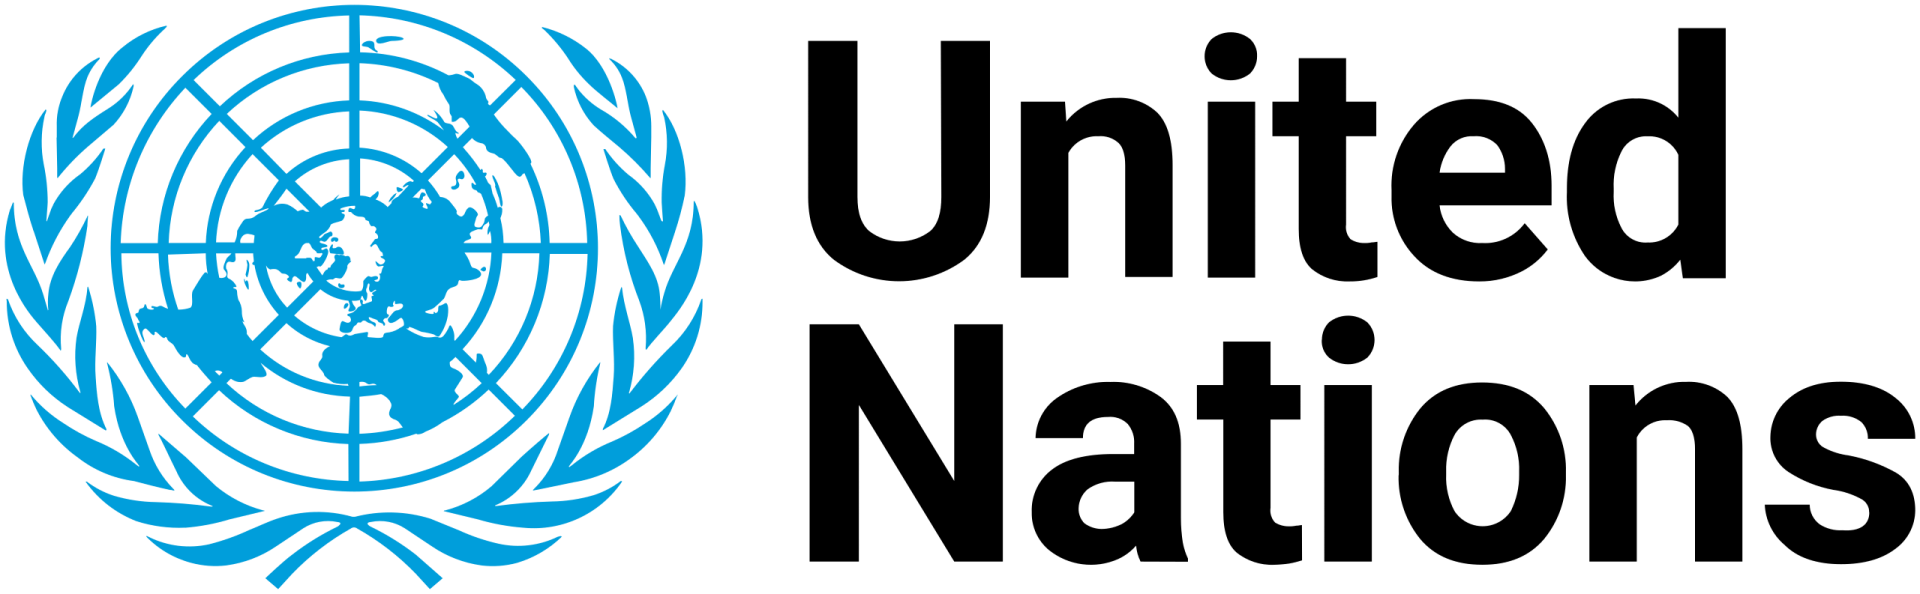 UN_Logo.svg